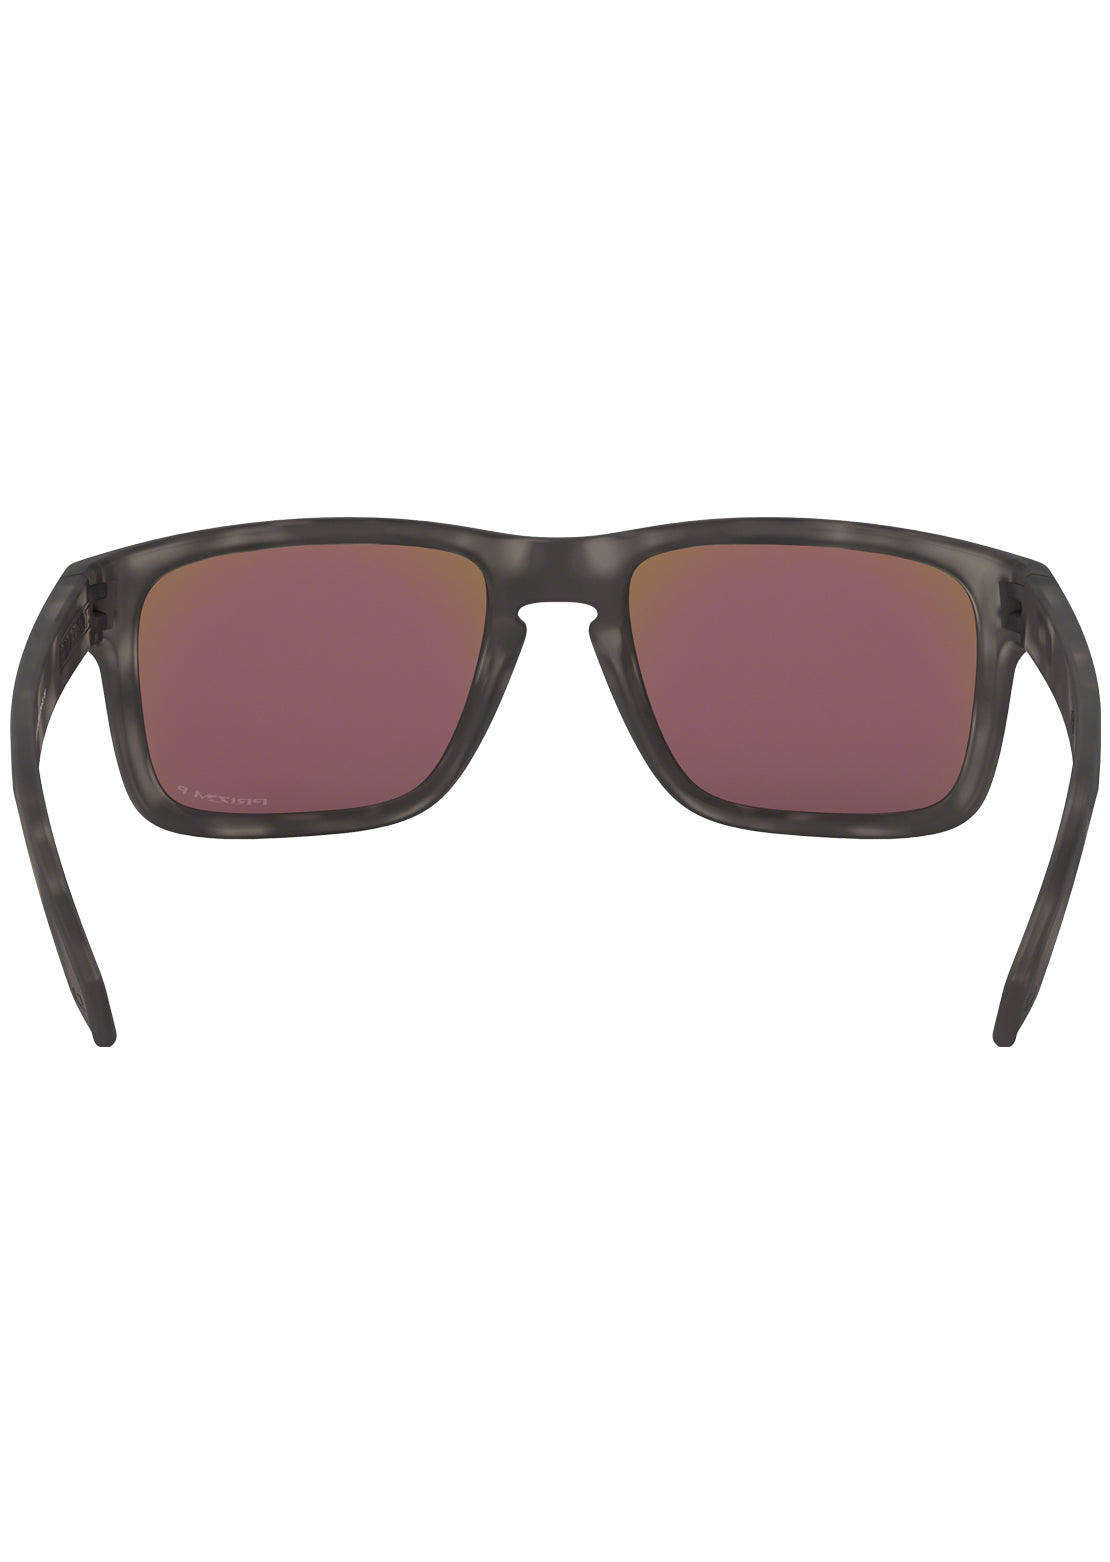 Oakley Men’s Holbrook Polarized Sunglasses Matte Black Tortoise/Prizm Sapphire Polarized